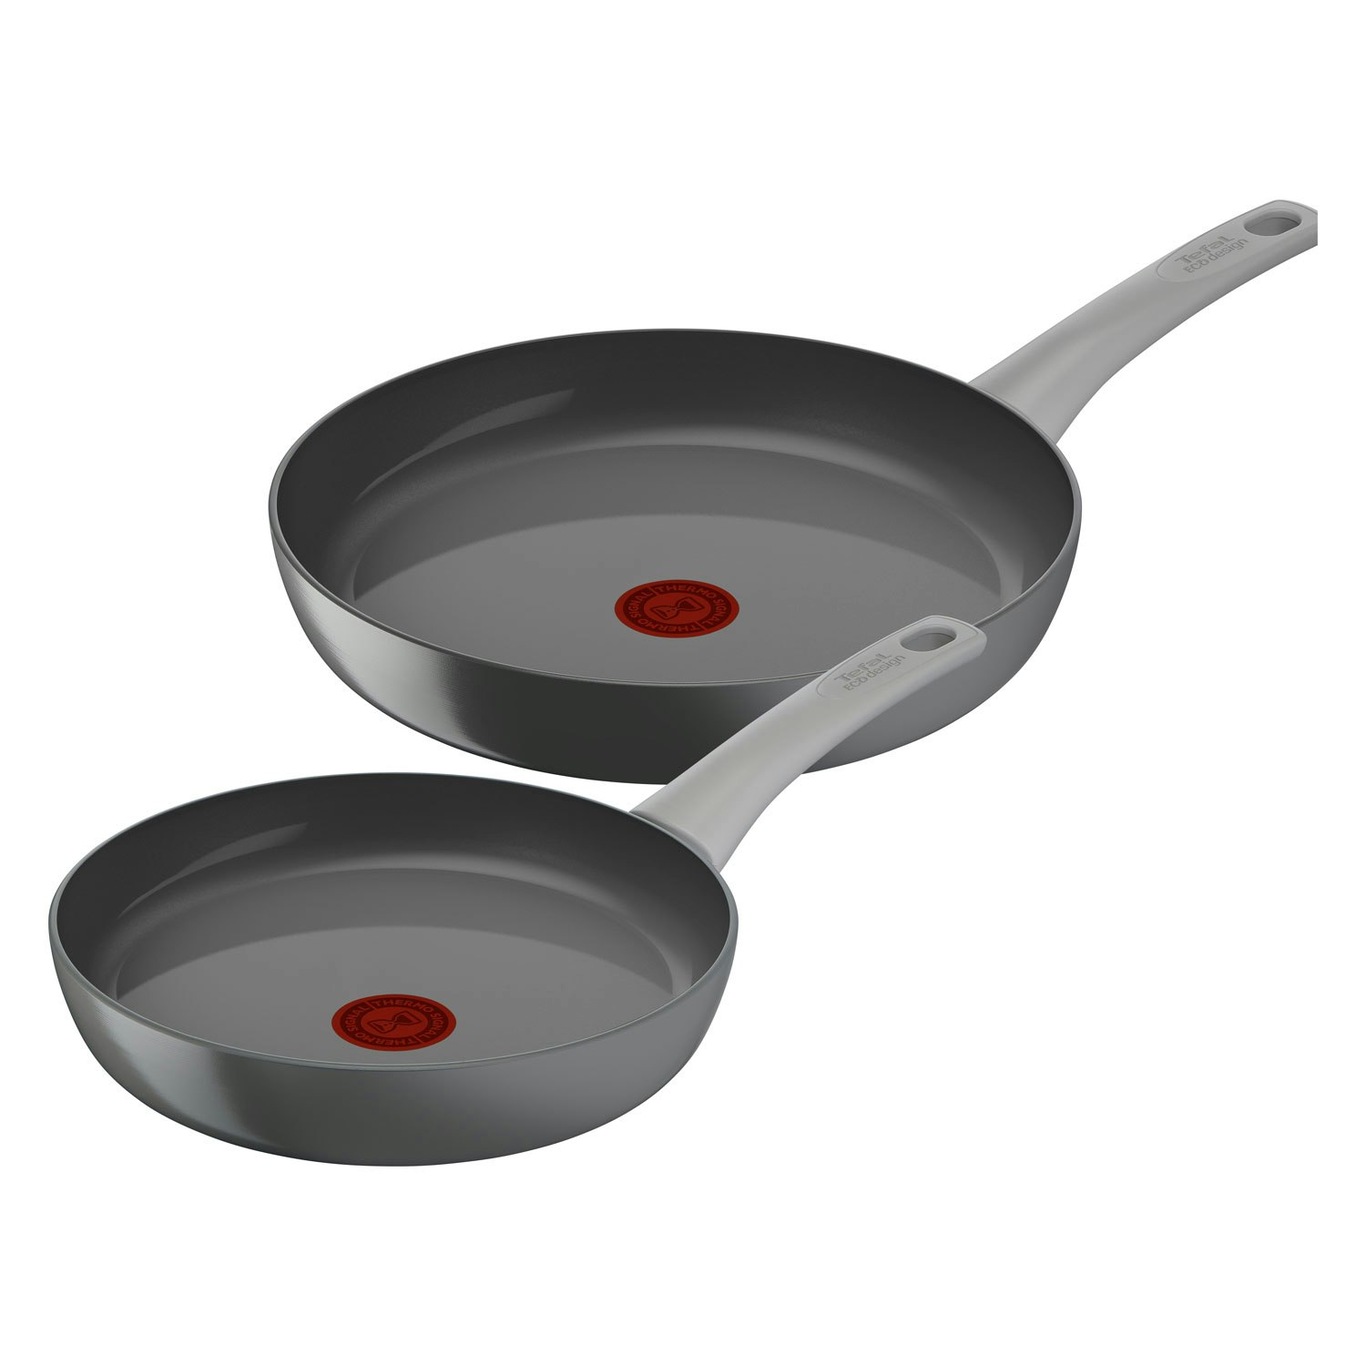 Tefal Wok Frying Pan, Grey